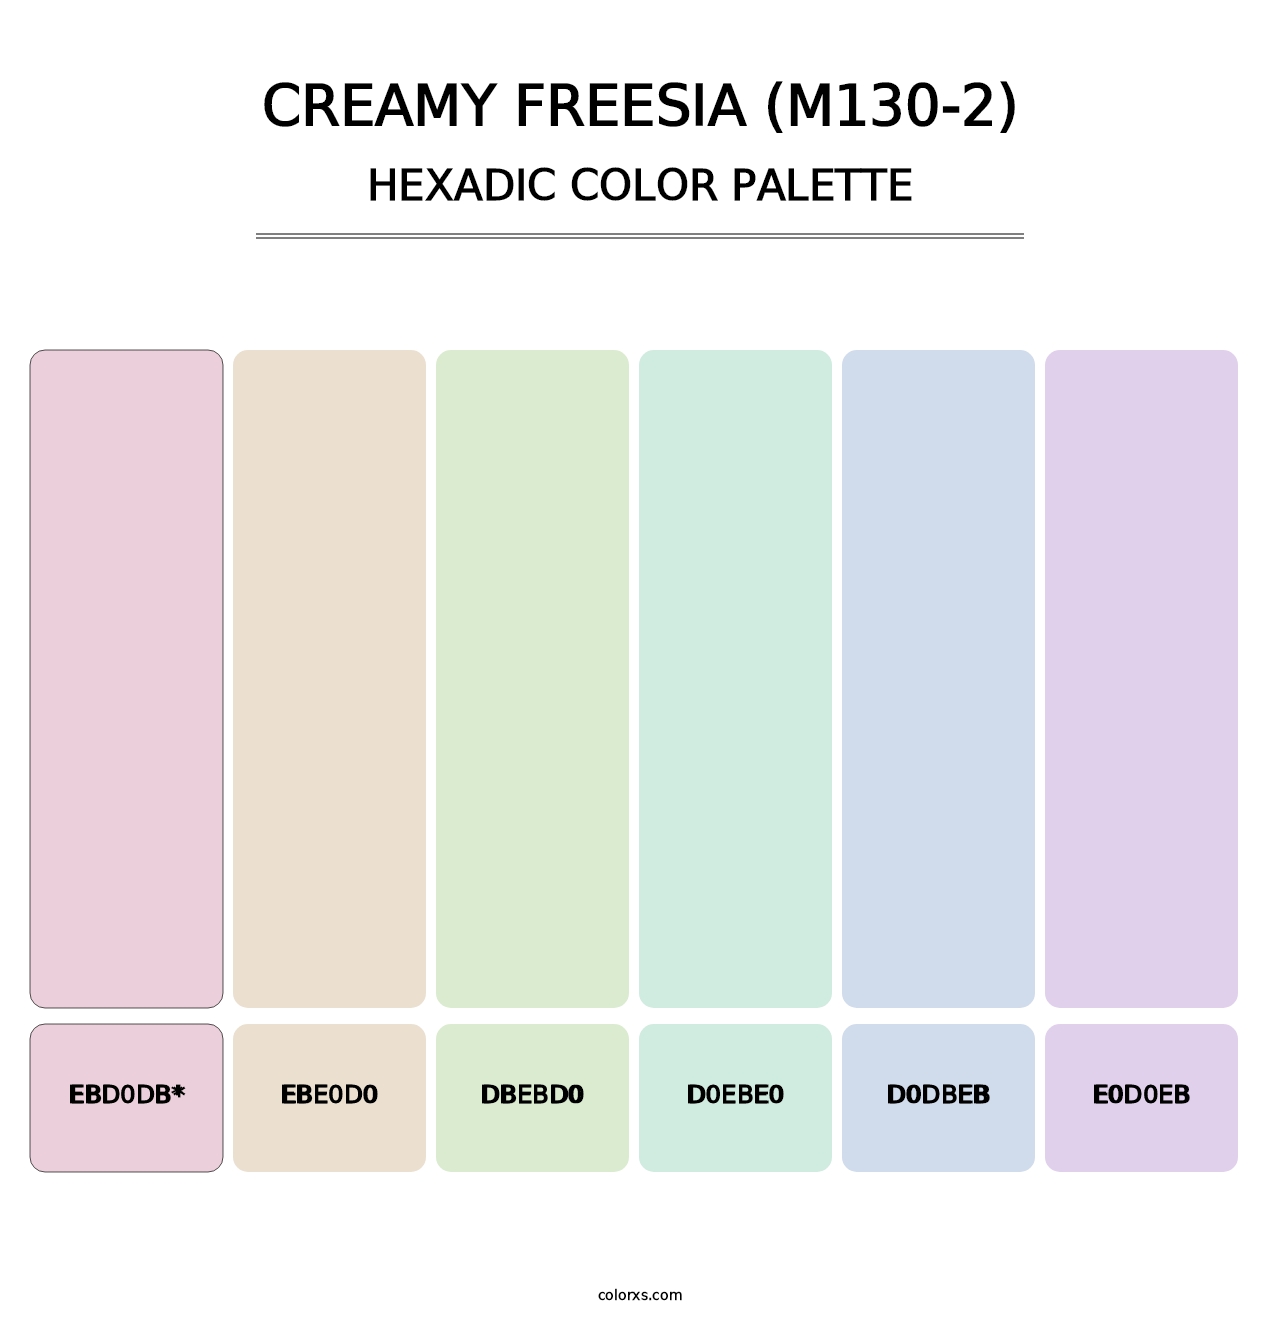 Creamy Freesia (M130-2) - Hexadic Color Palette